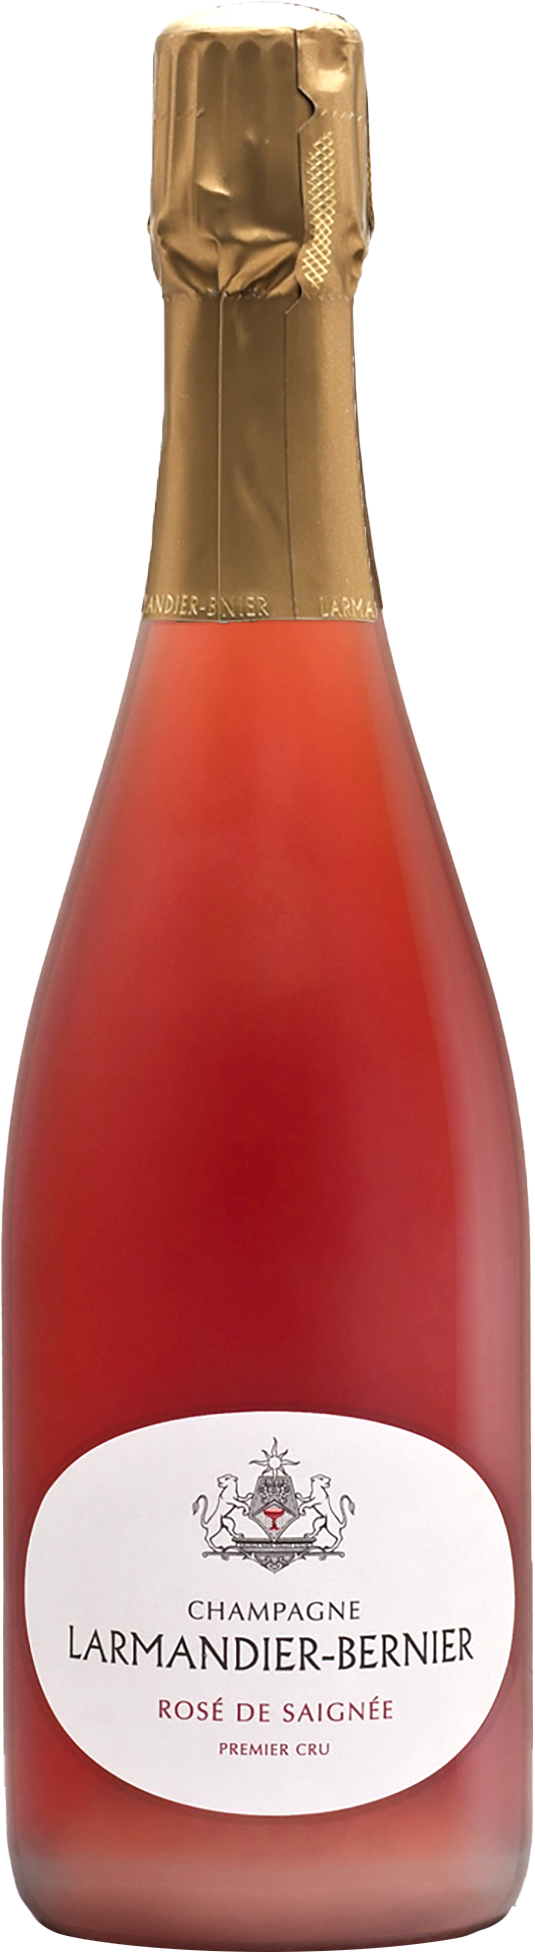 Champagne Larmandier-Bernier 1er Cru Rosé de Saignée NV (Base 18. Disg. Jan 2020)